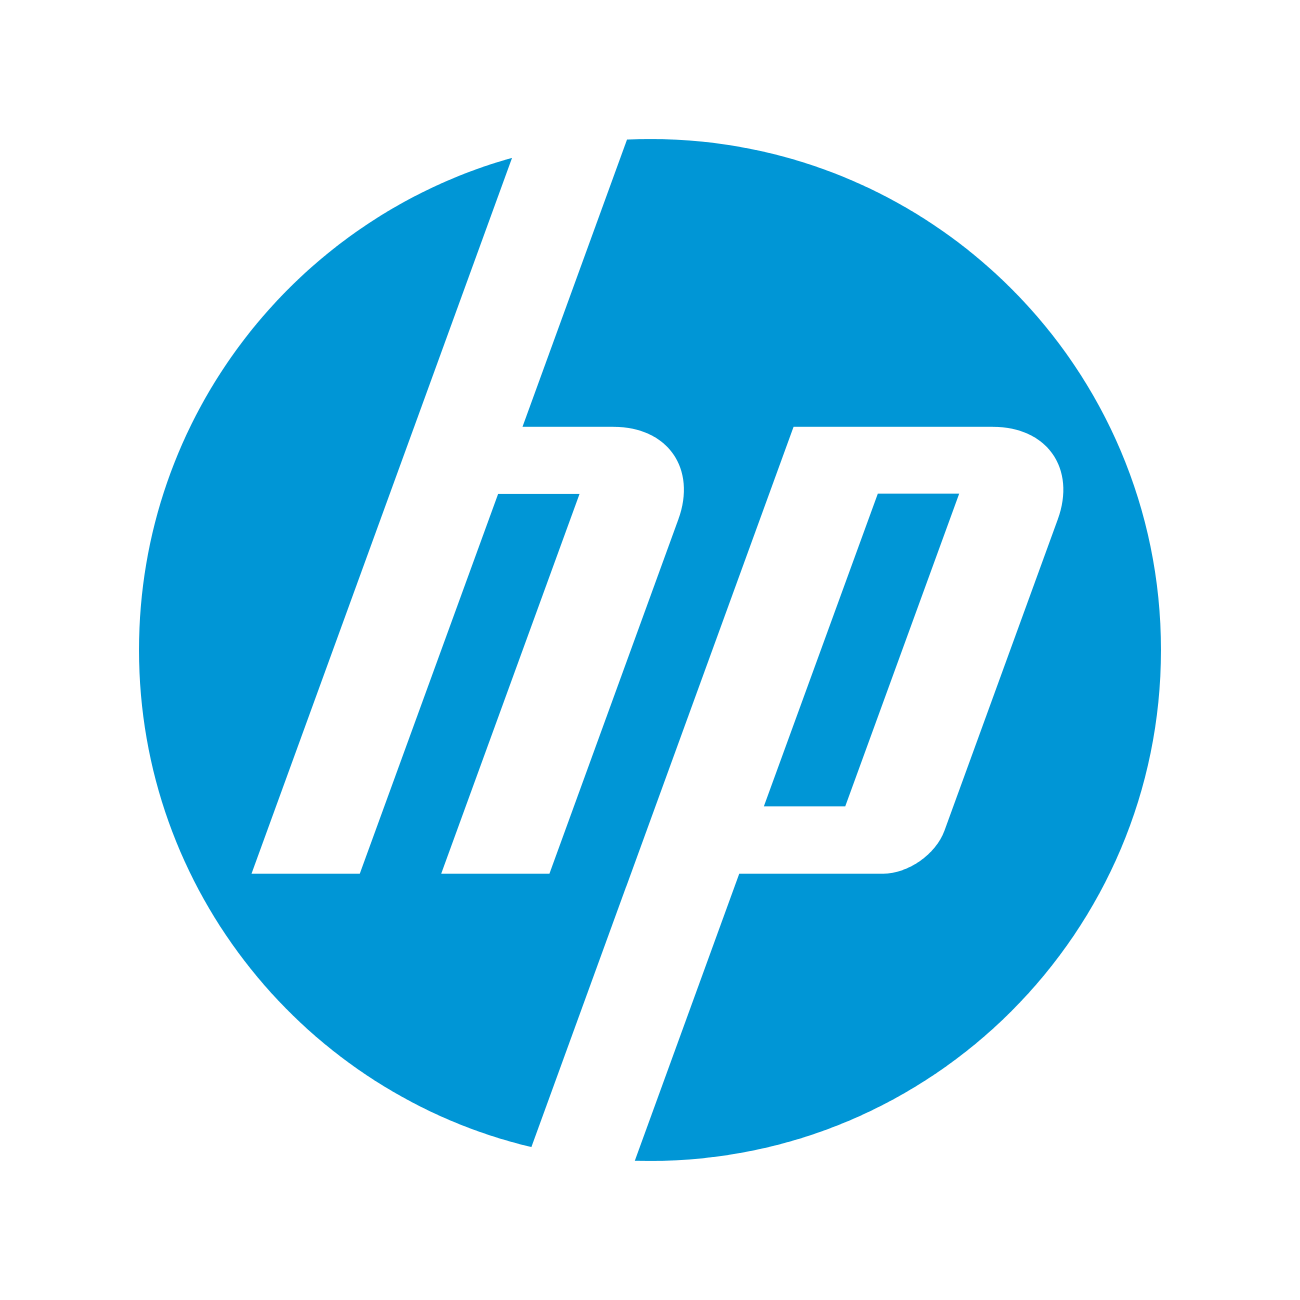 HP Engage One Pro POS Terminal